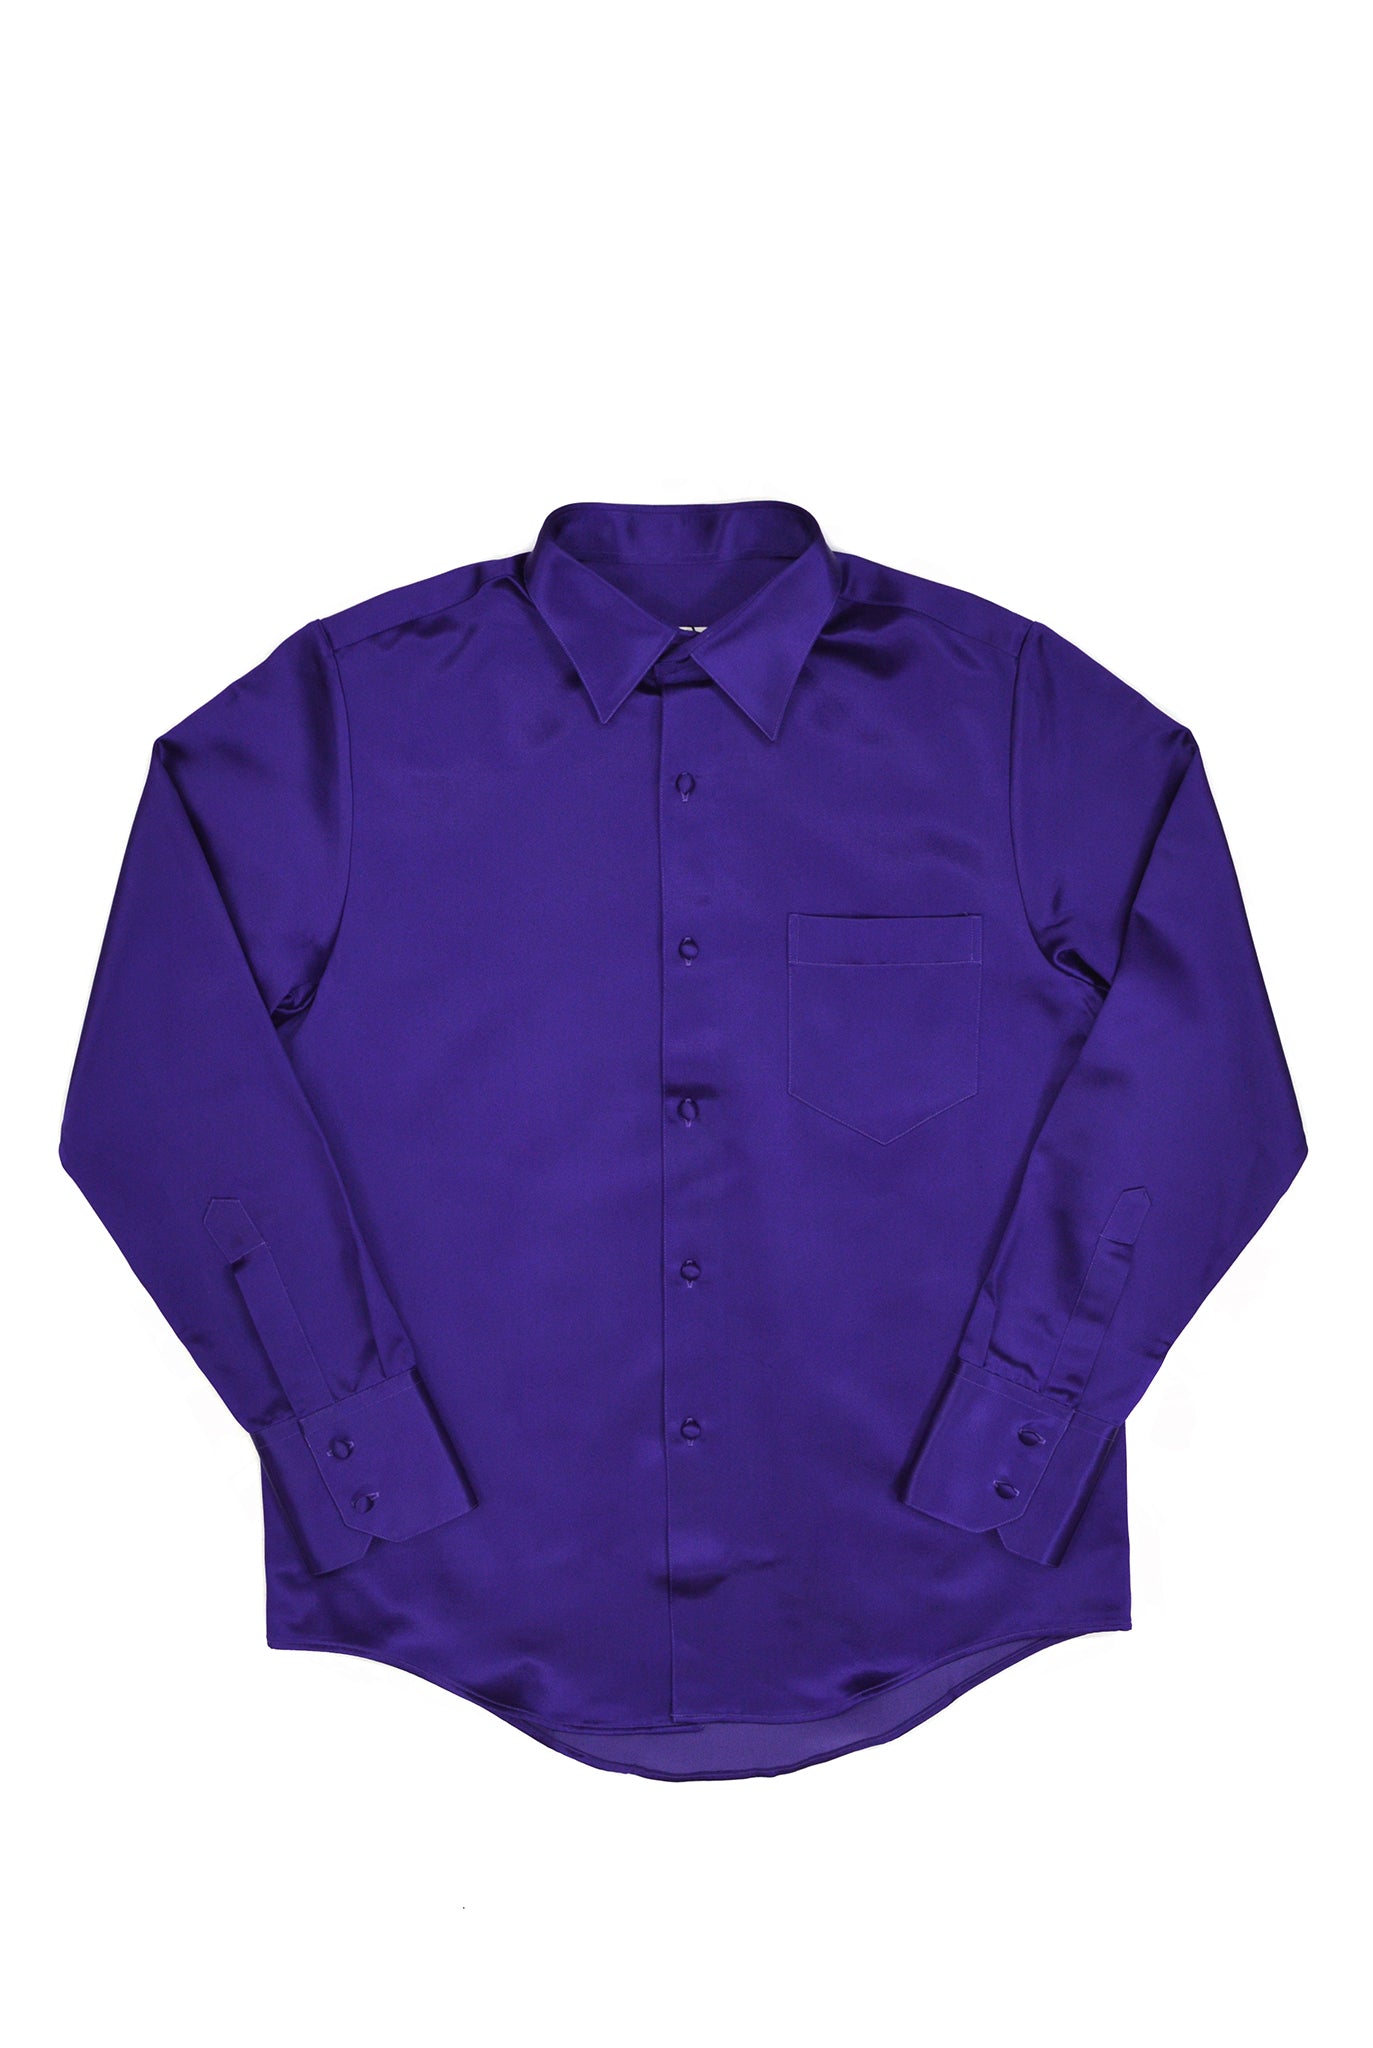 Ernest W. Baker Covered Button Shirt, Purple Satin